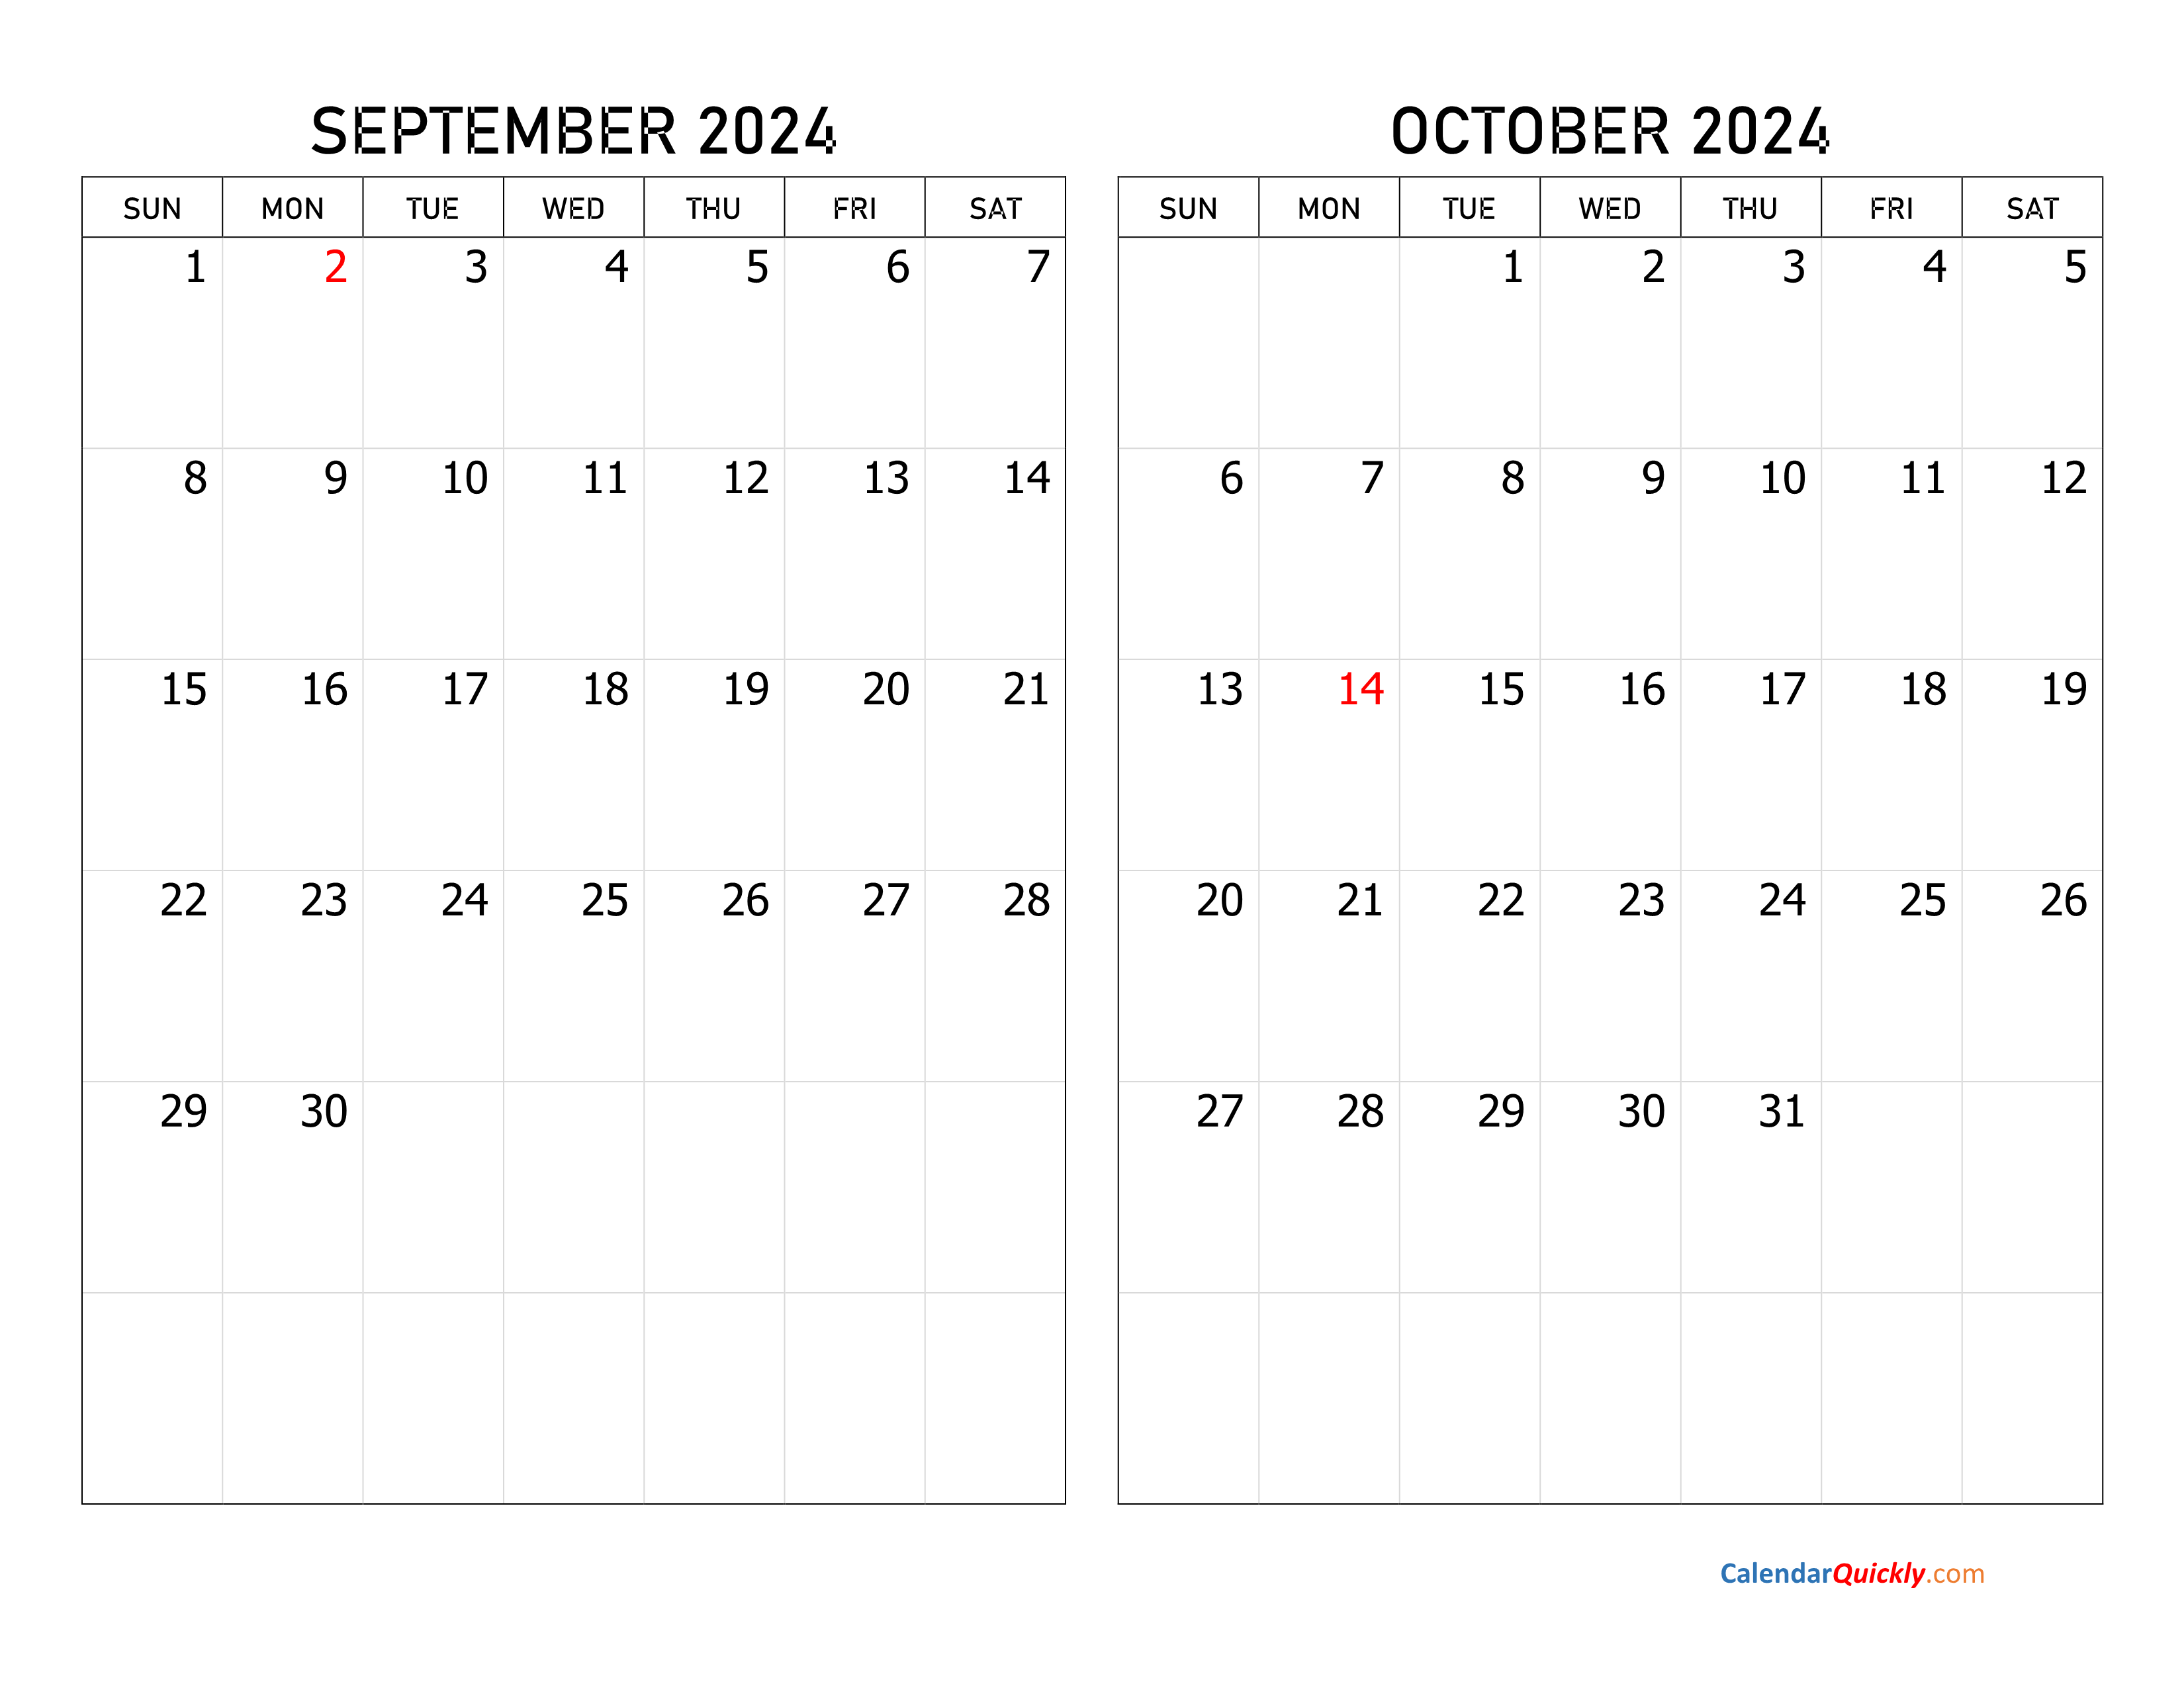 september-and-october-2024-calendar-calendar-quickly